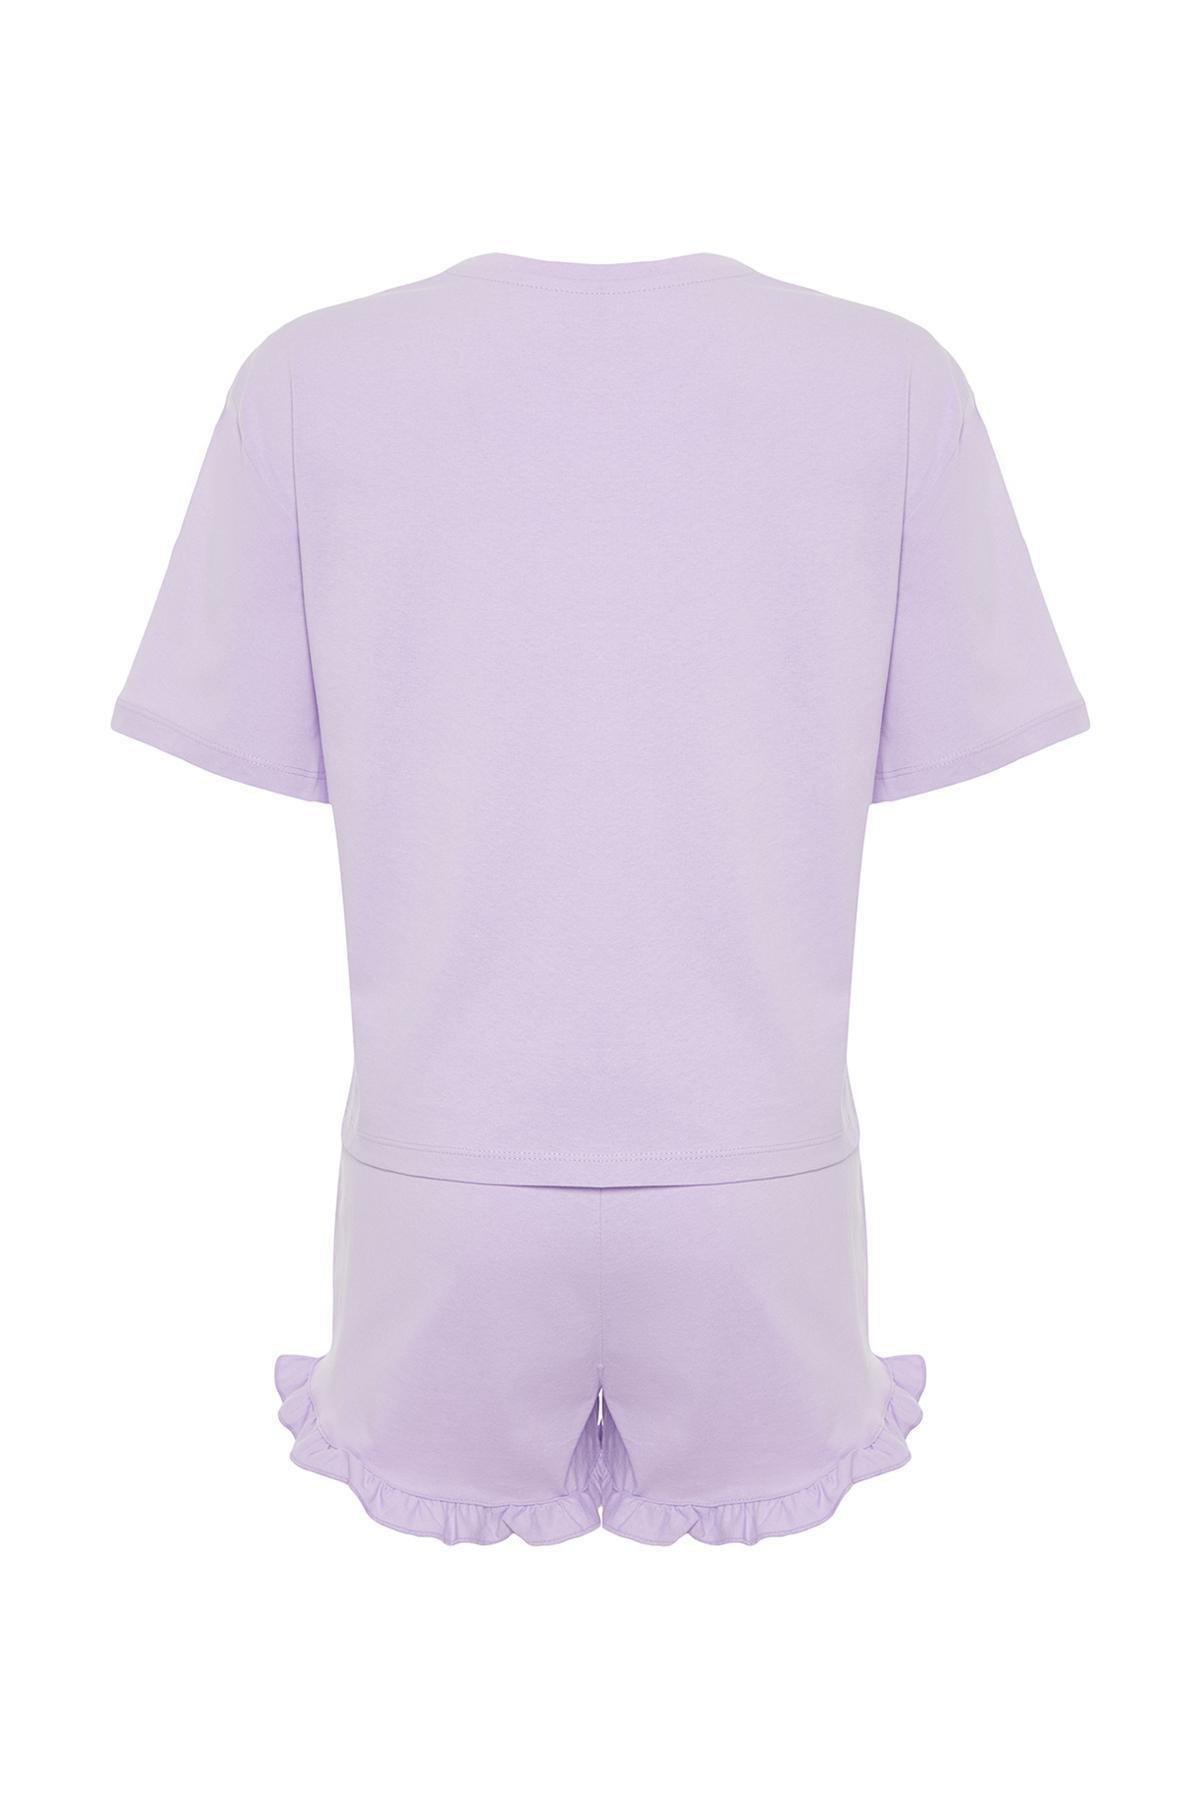 Trendyol - Purple Animal Print Ruffle Detail Pajamas Set